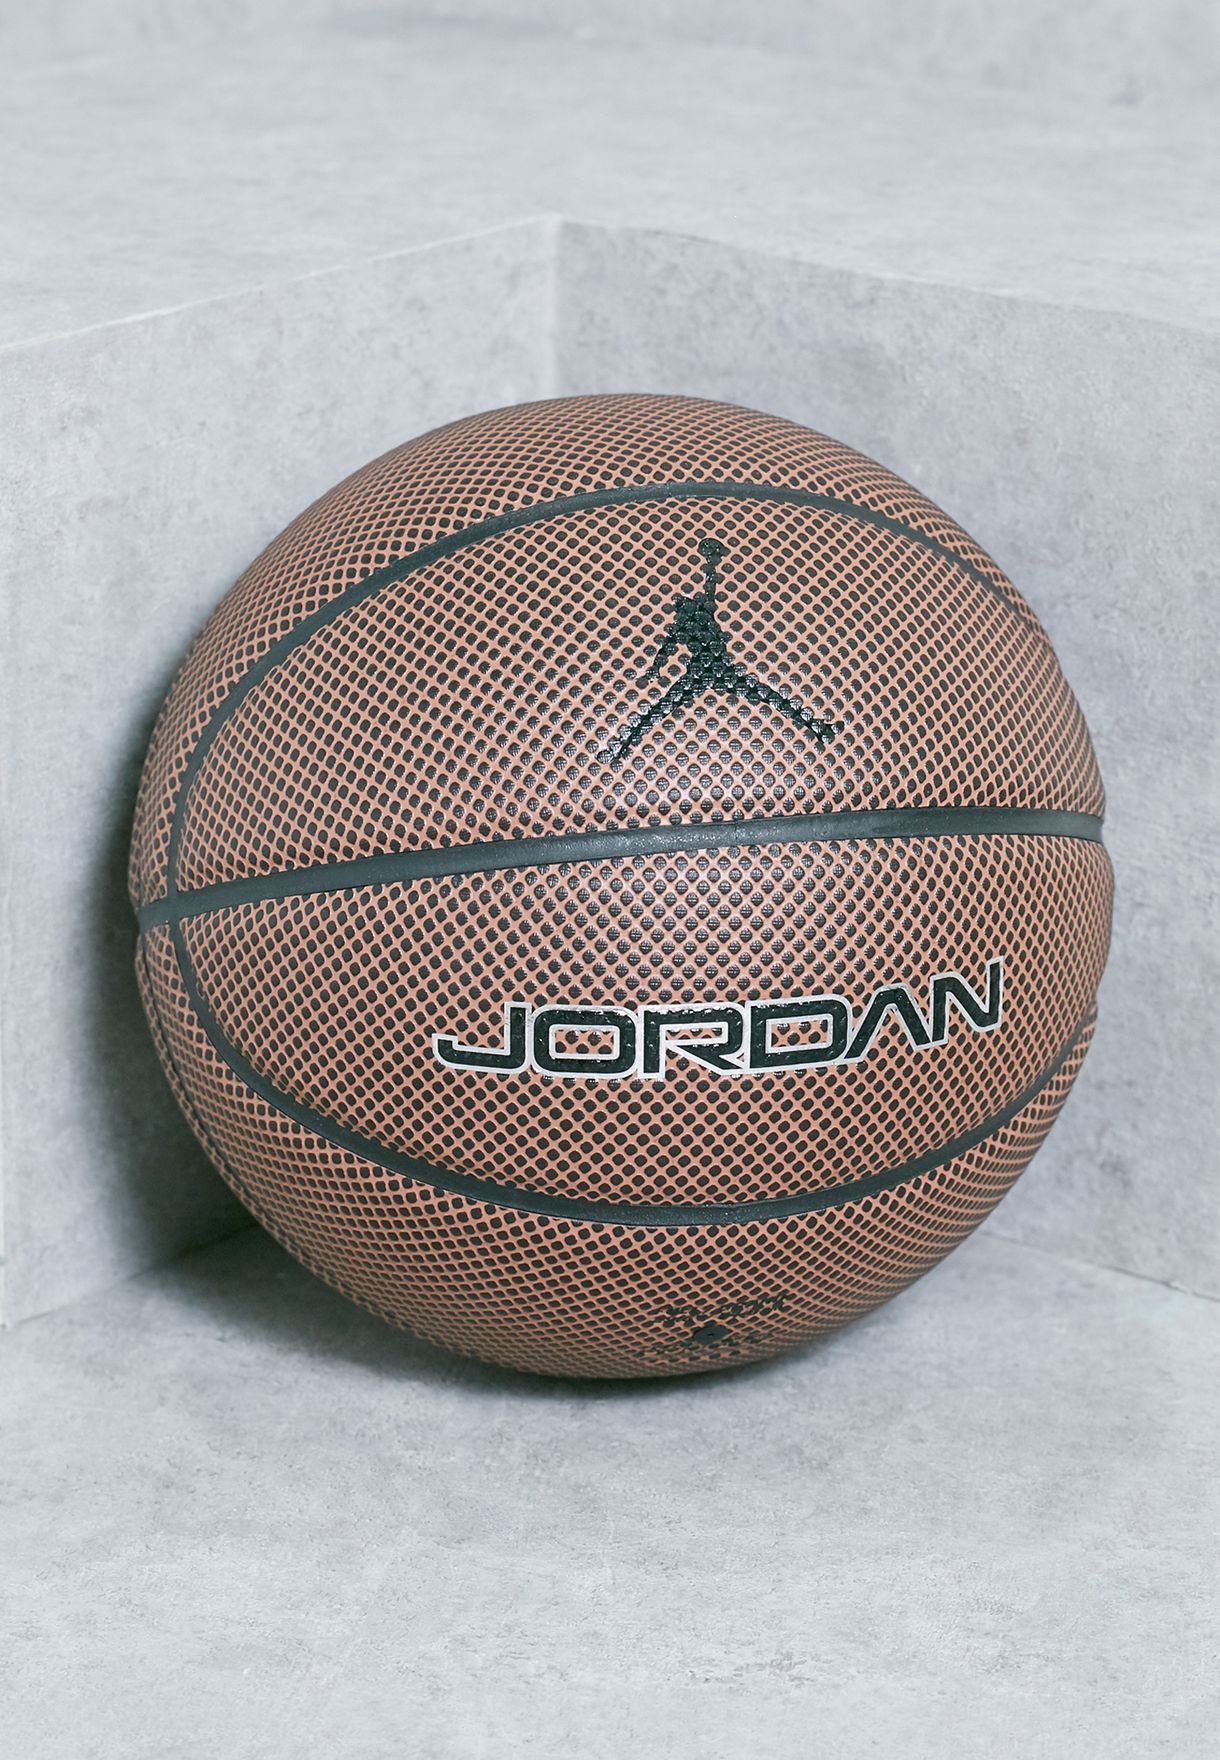 jordan legacy basketball